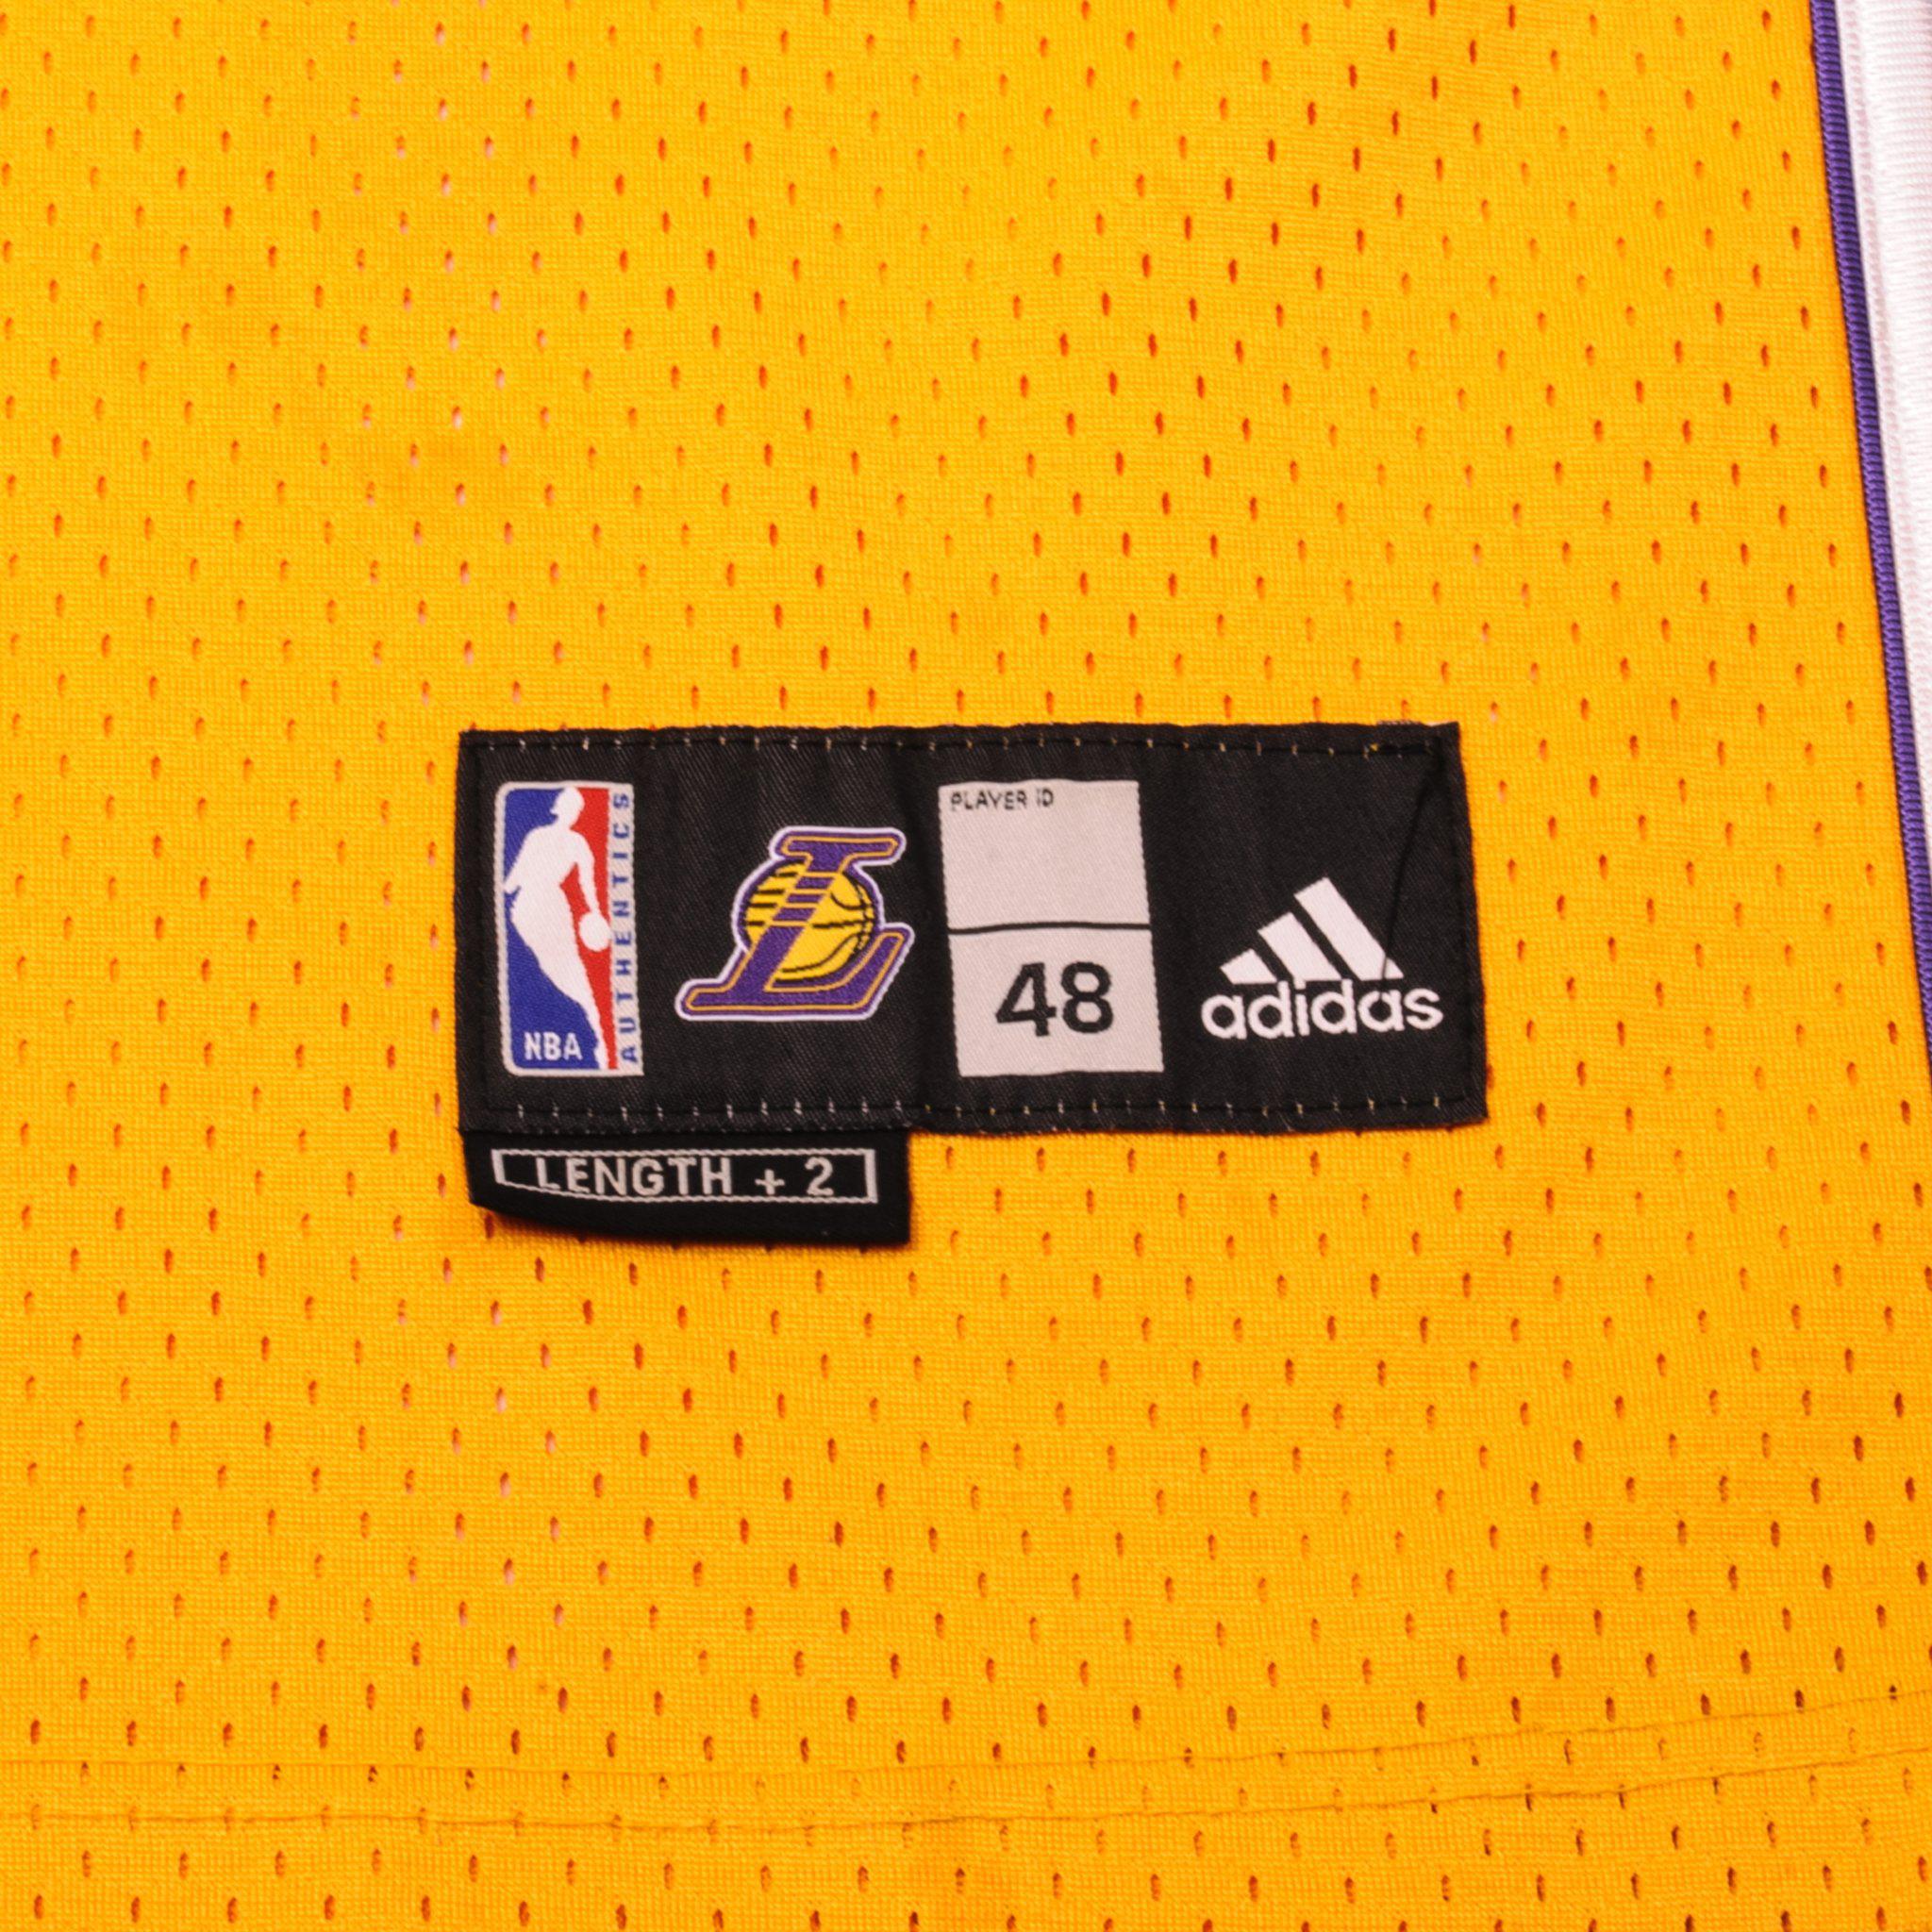 Rare Adidas NBA Los Angeles Lakers Kobe Bryant 81 Point Raptors Colorway  Jersey